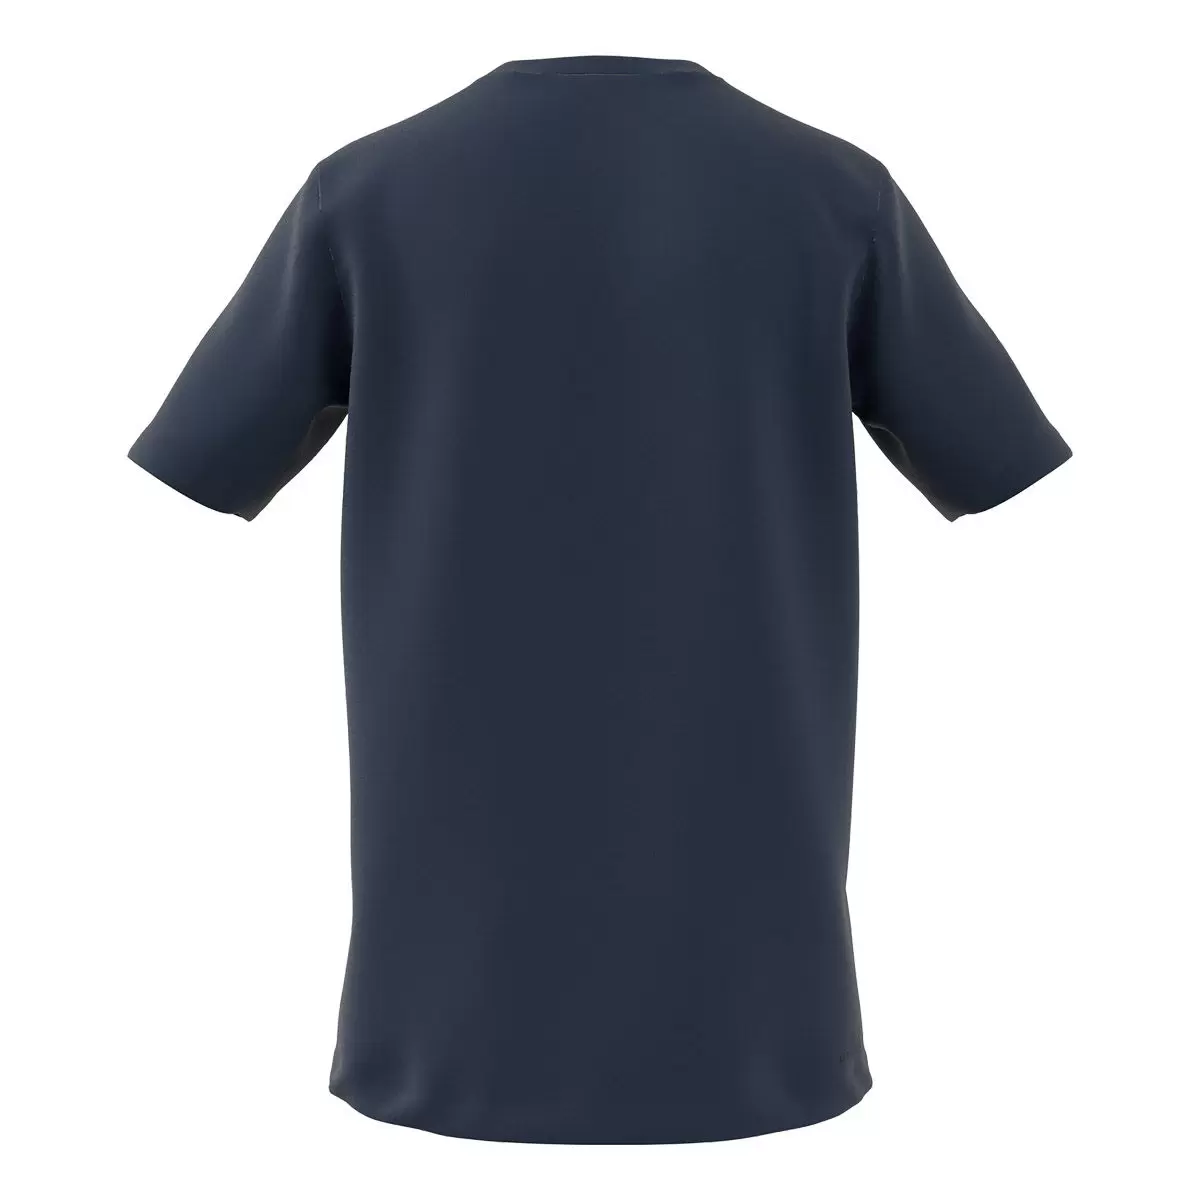 Adidas 男短袖Logo上衣 深藍 L